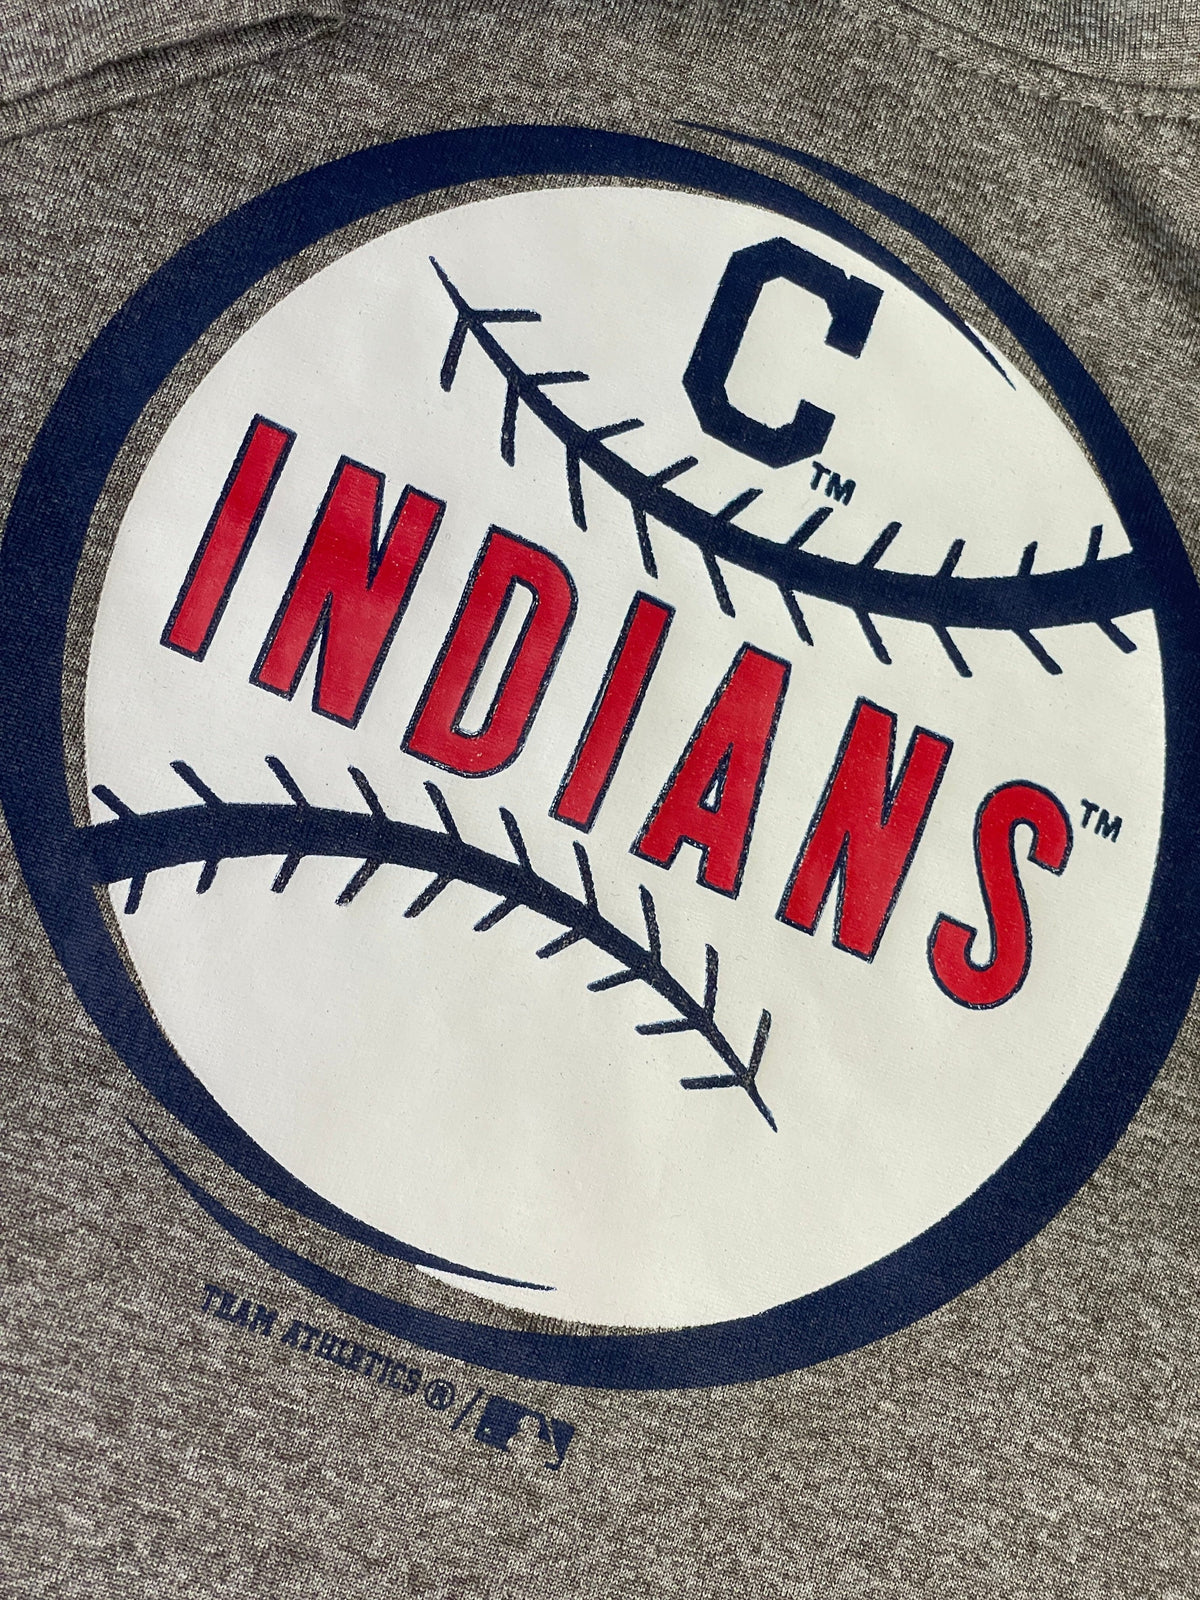 MLB Cleveland Guardians (Indians) Grey T-Shirt Toddler 2T